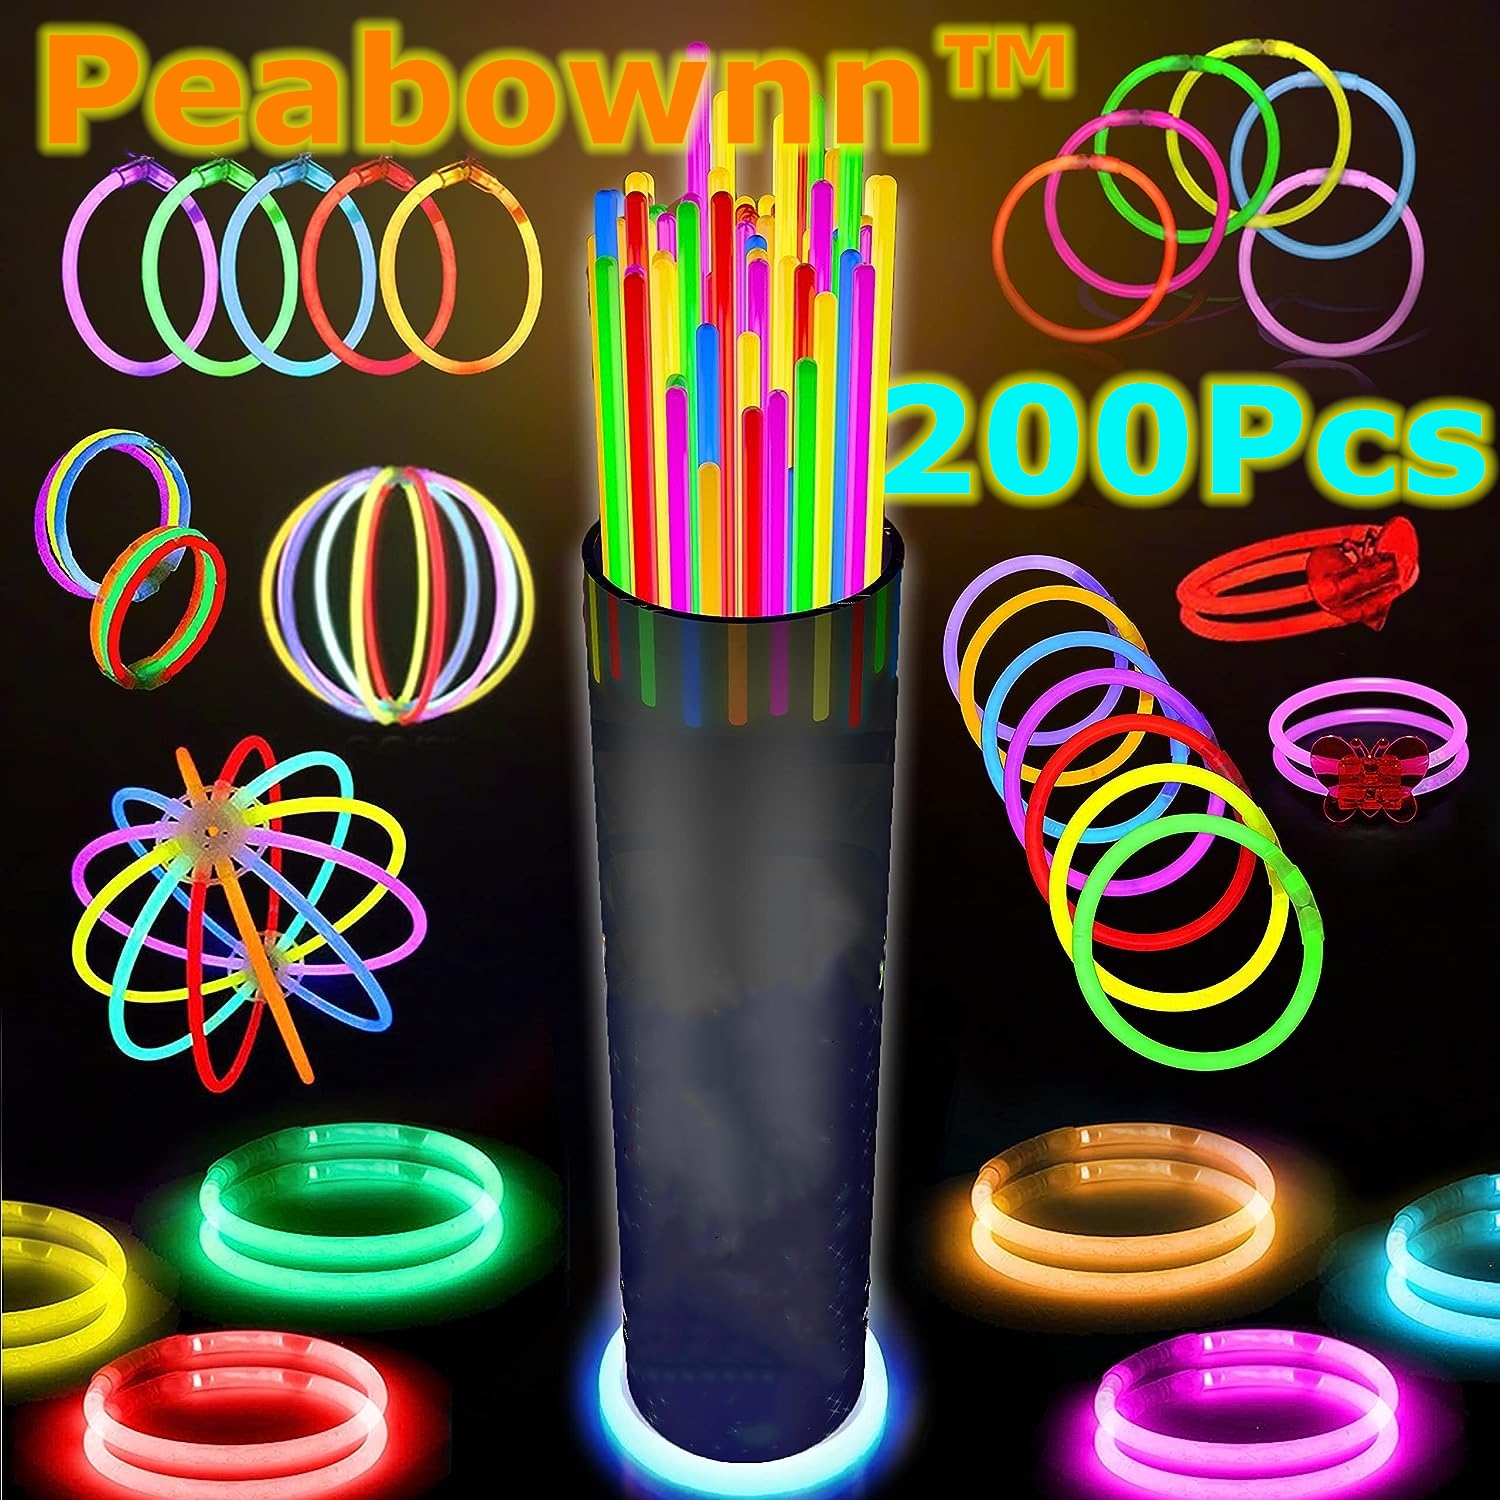 200pc Mini Glow Sticks